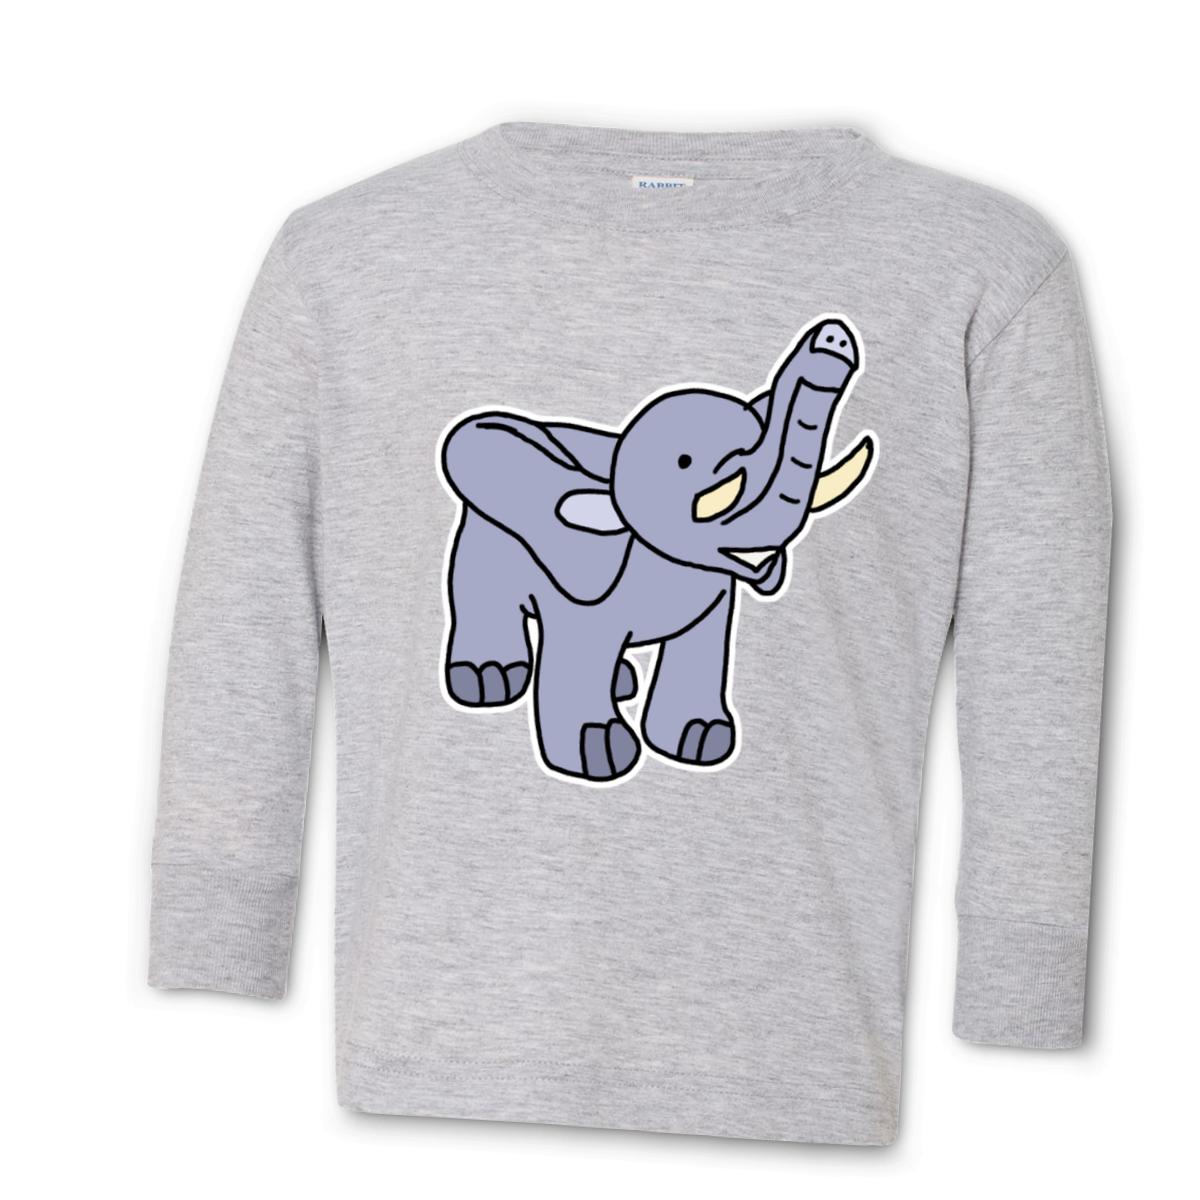 Toy Elephant Toddler Long Sleeve Tee 2T heather